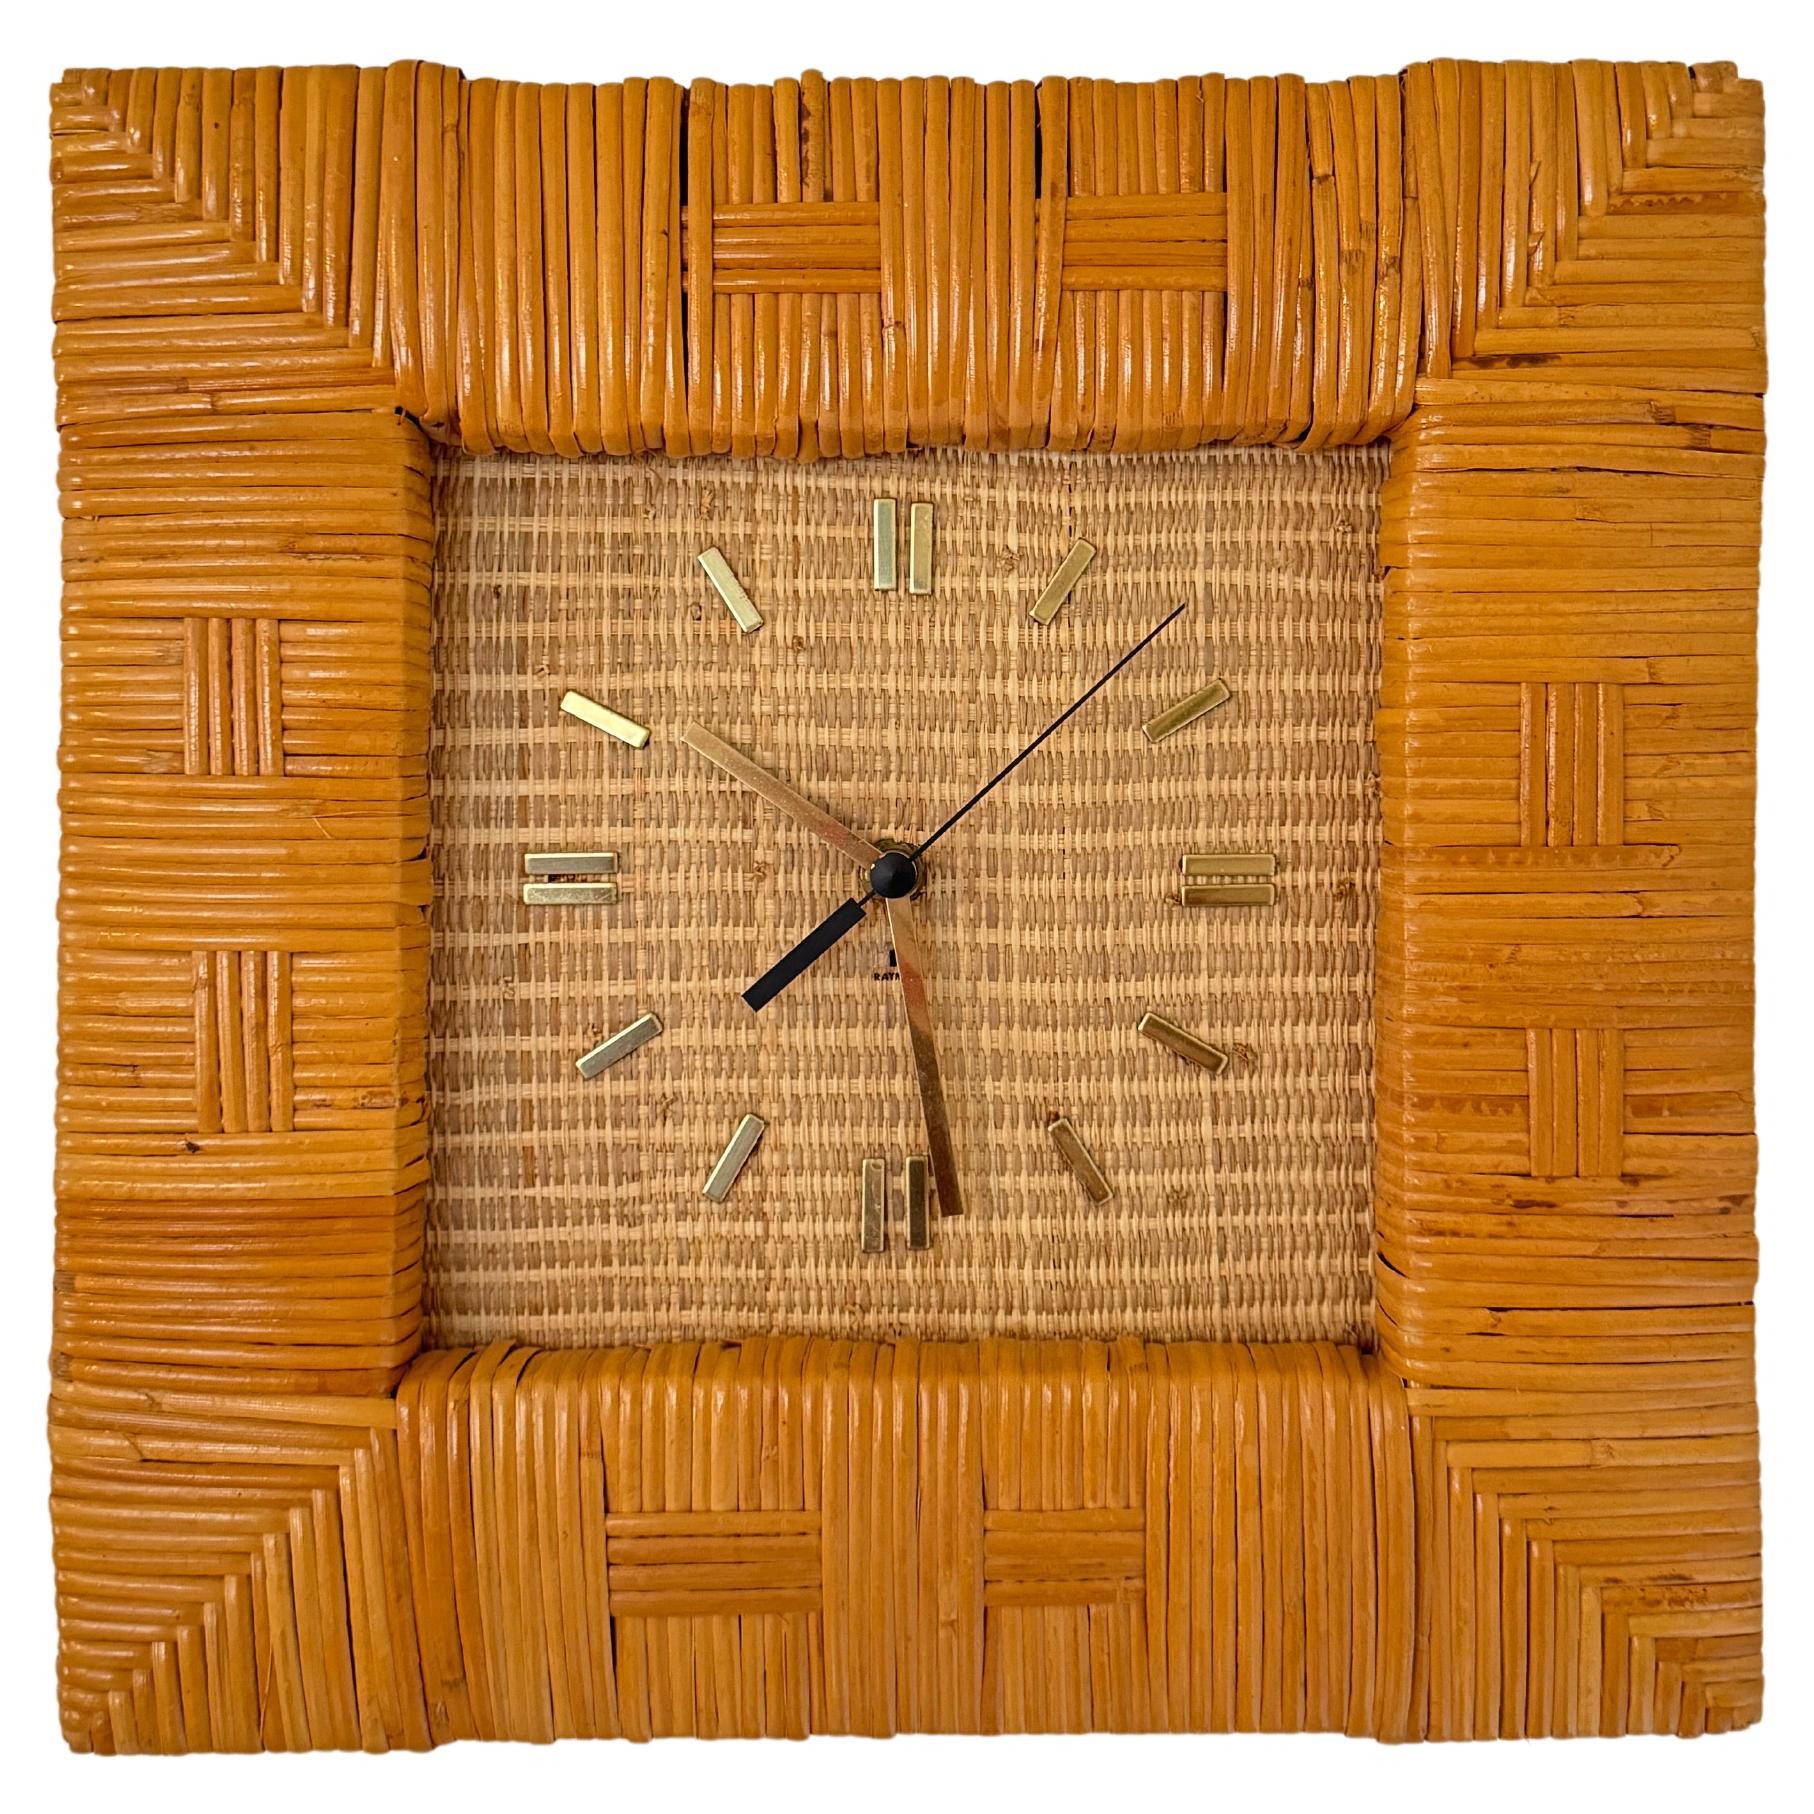 Mid century modern rattan wall clock by Raymor, circa 1960s. 